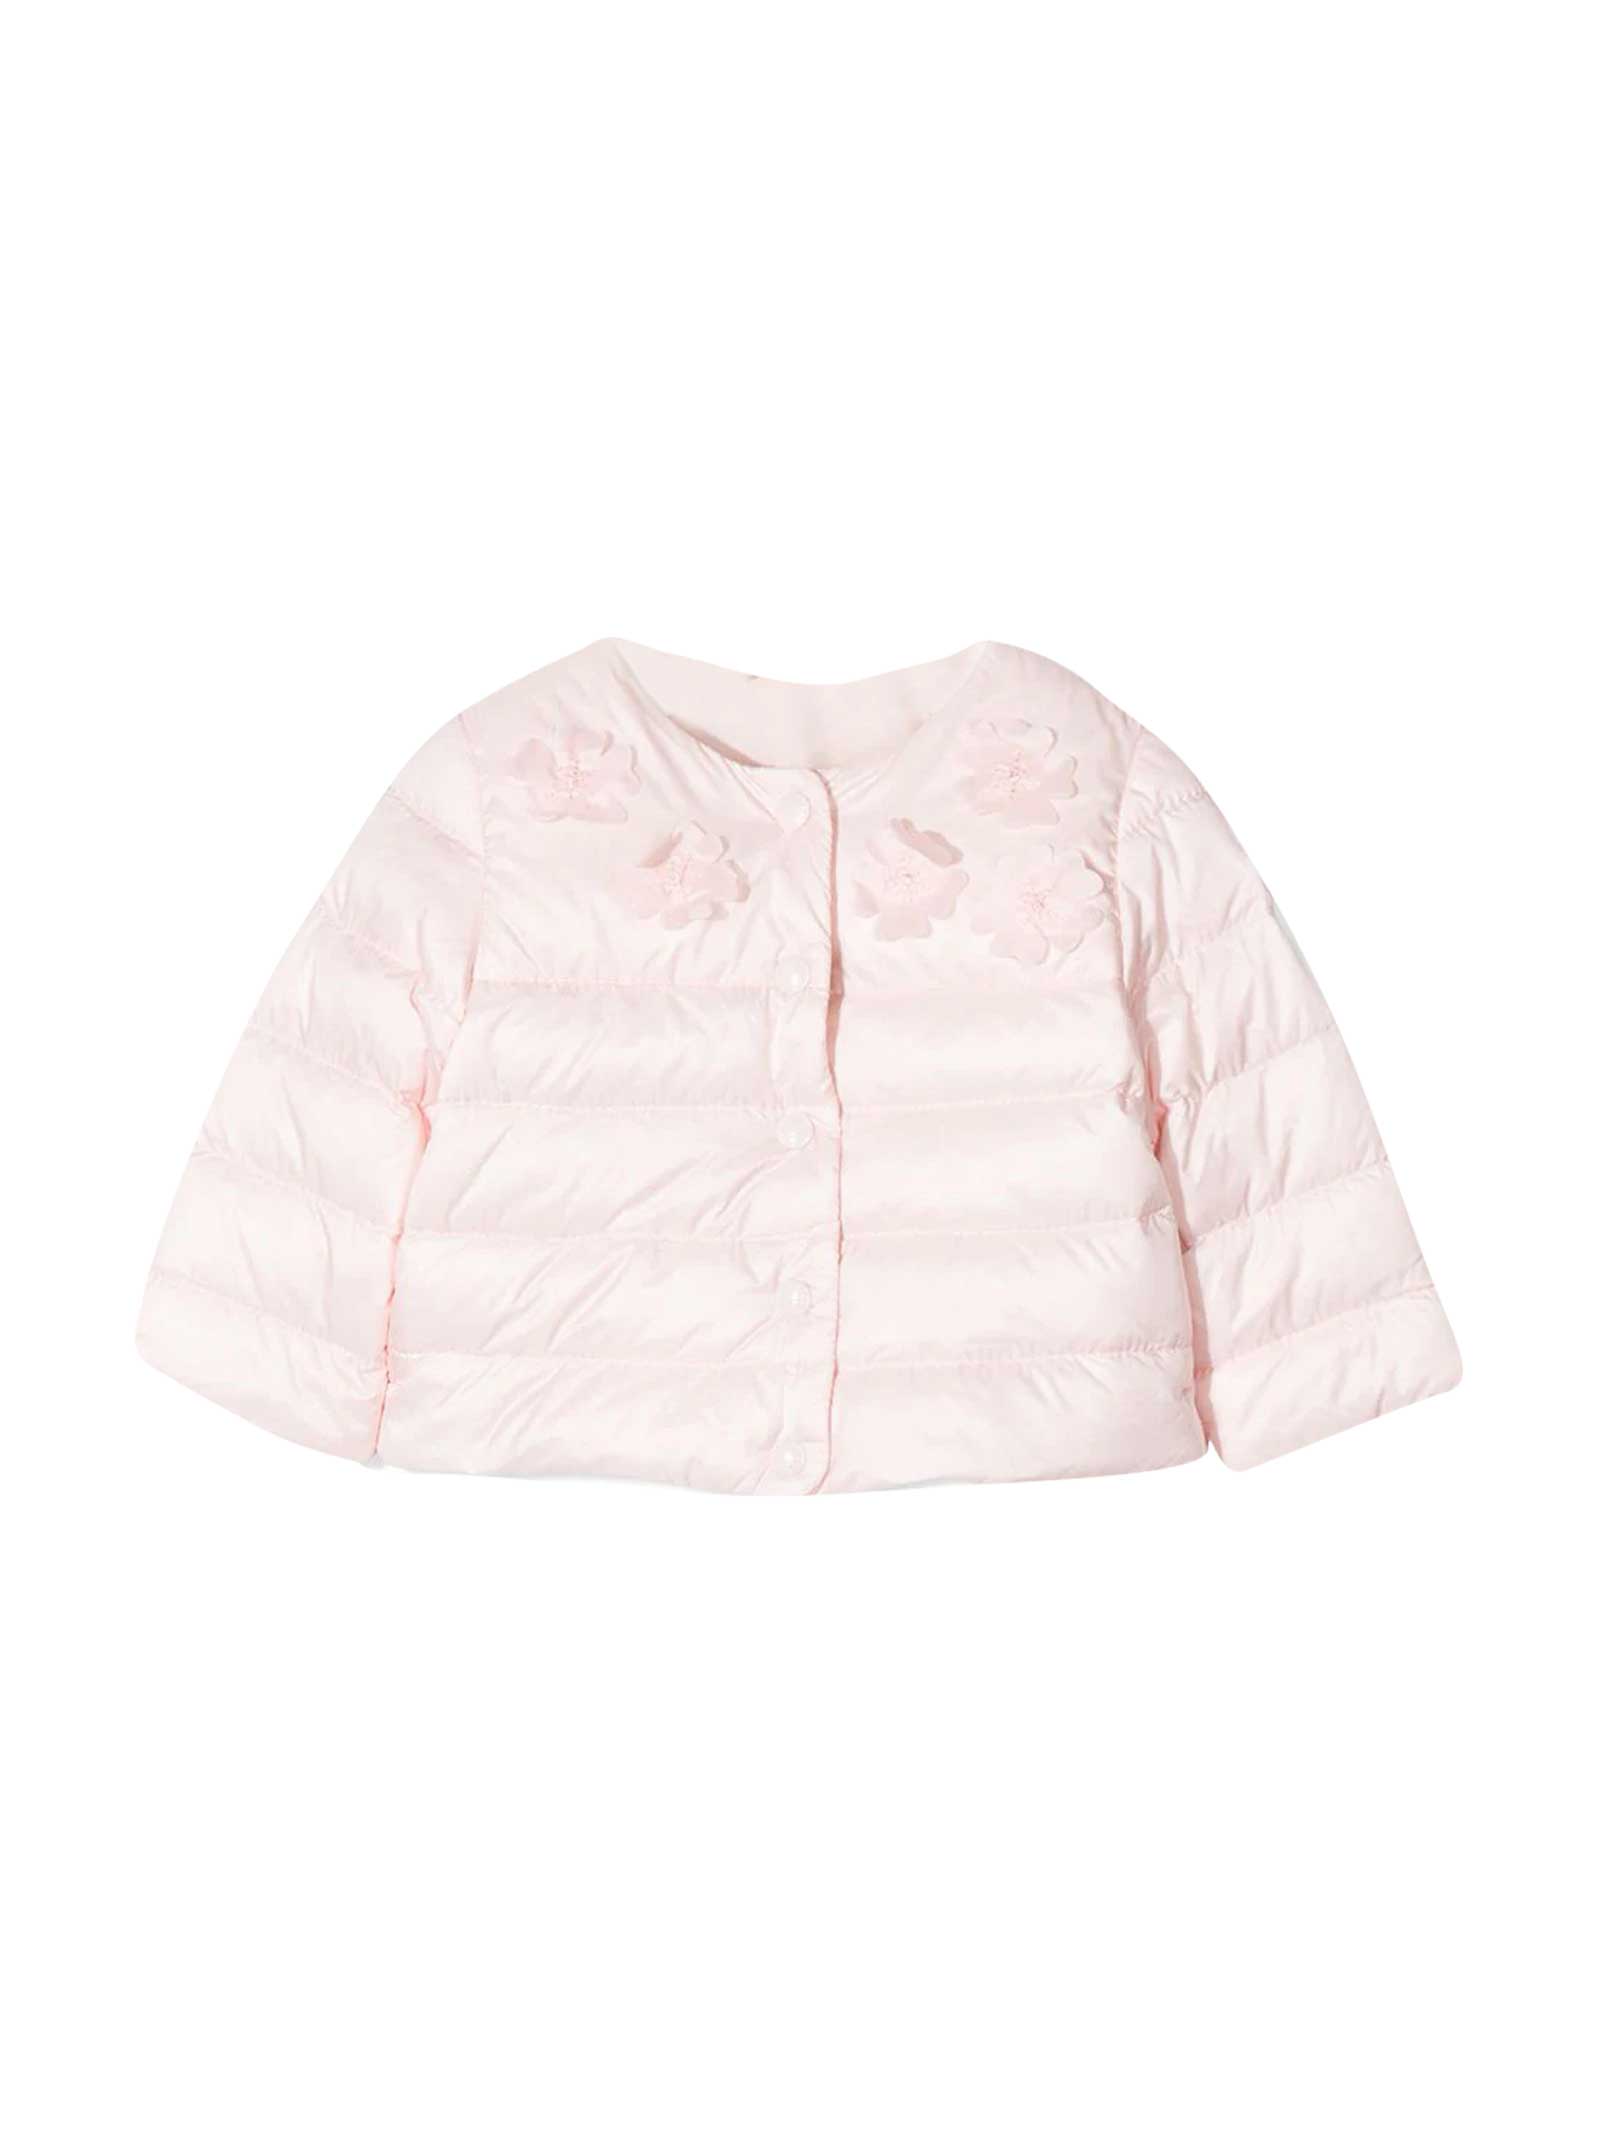 Moncler Pink Lightweight Jacket